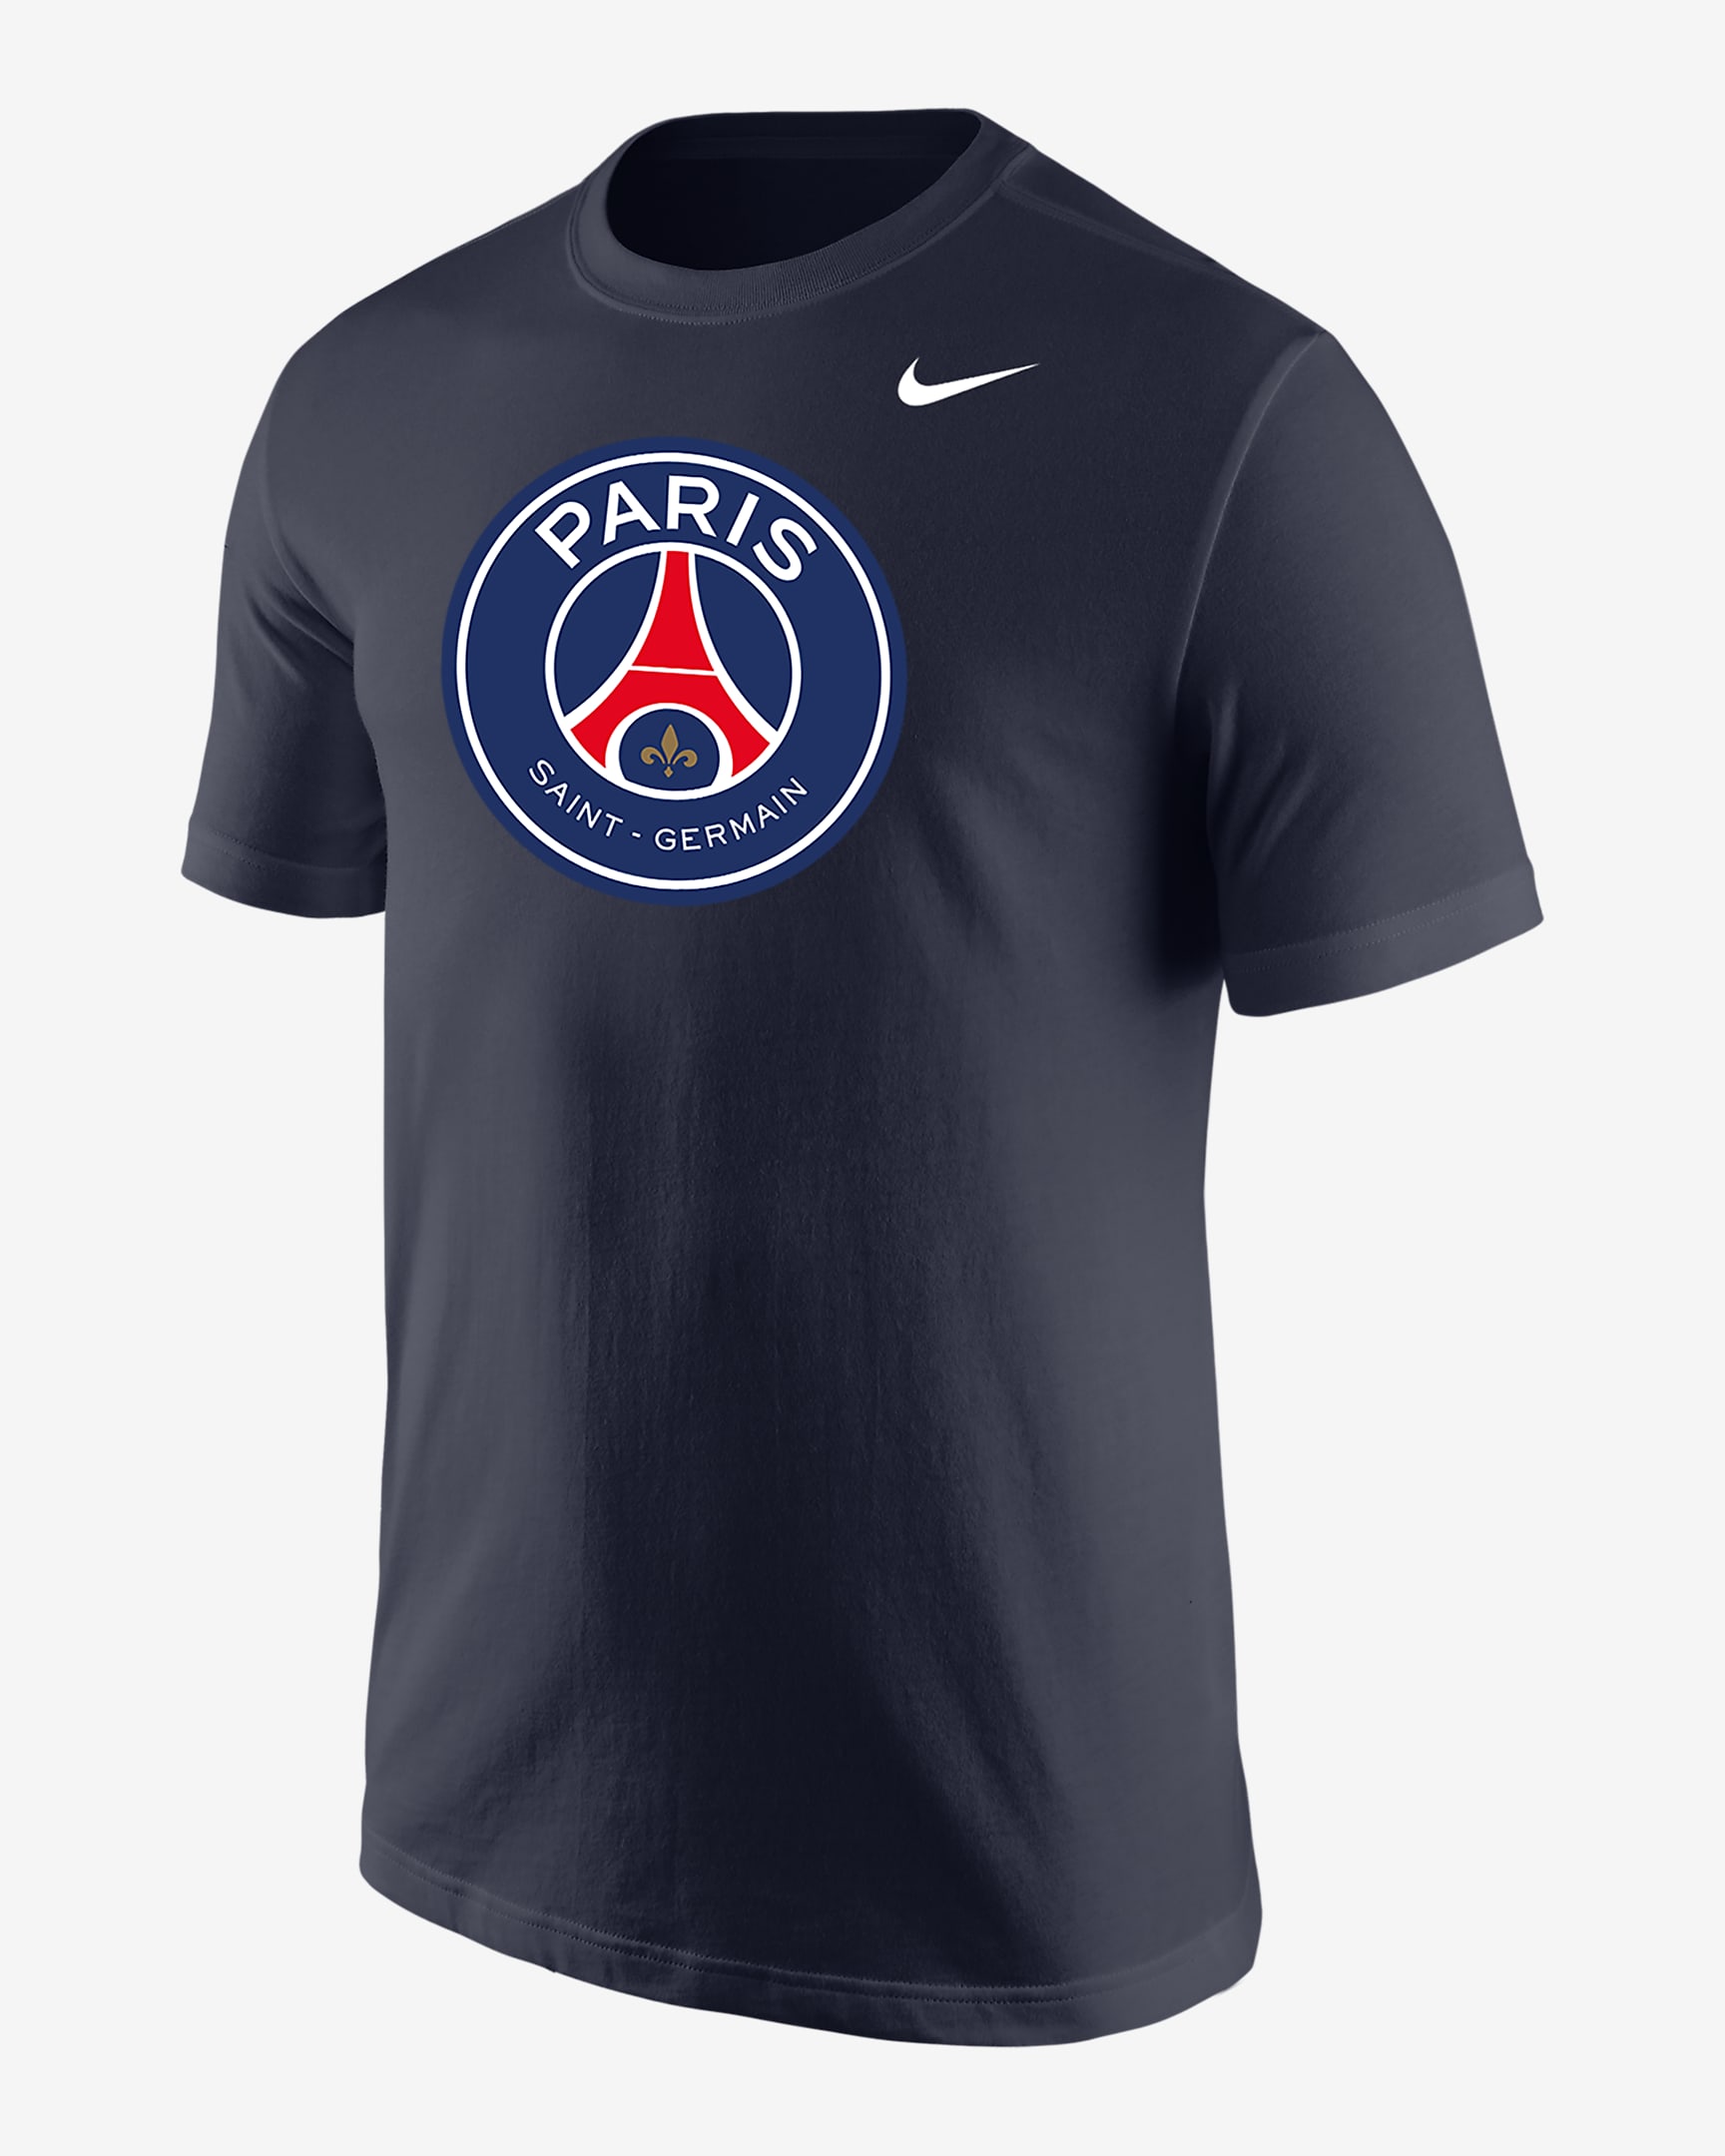 Playera para hombre Paris Saint-Germain. Nike.com